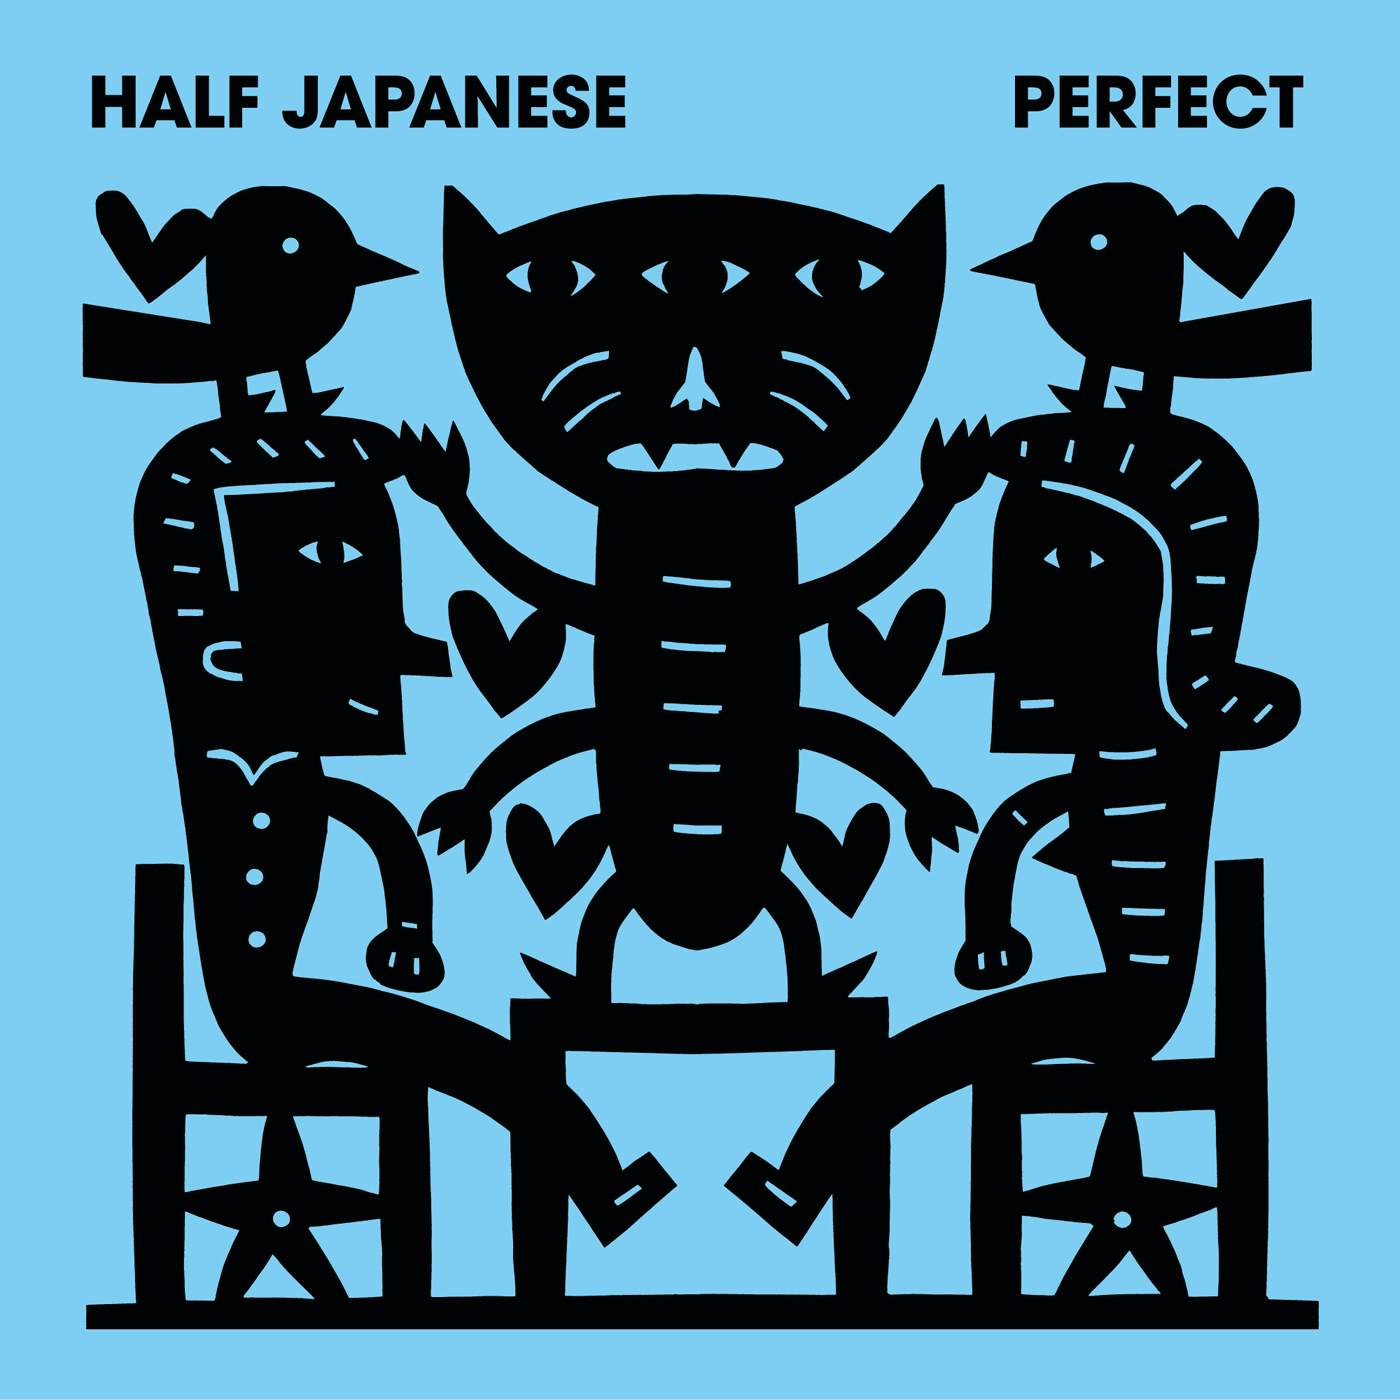 Half Japanese Perfect Vinyl Record